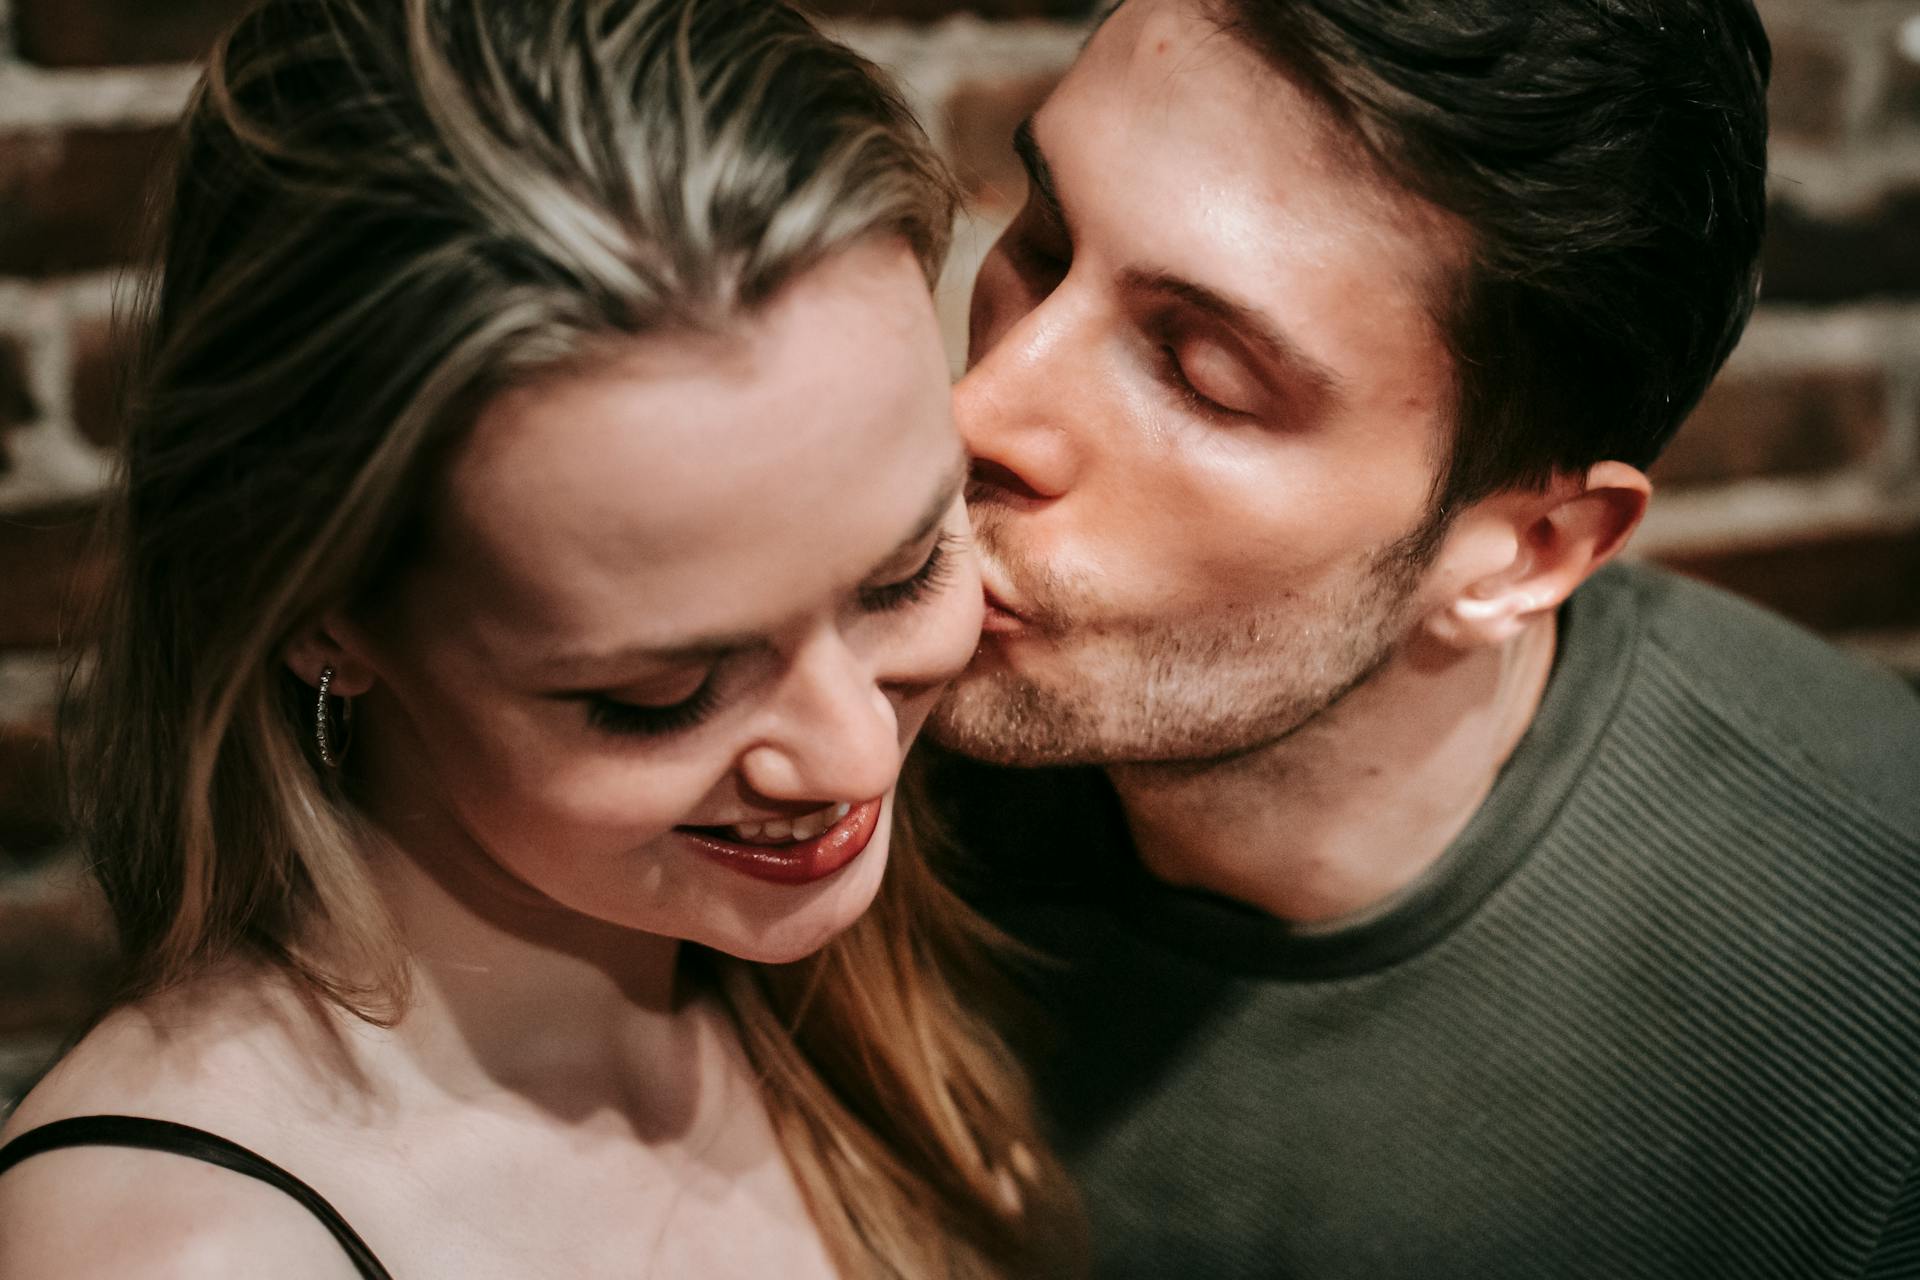 A man kissing his girlfriend on the cheek | Source: Pexels